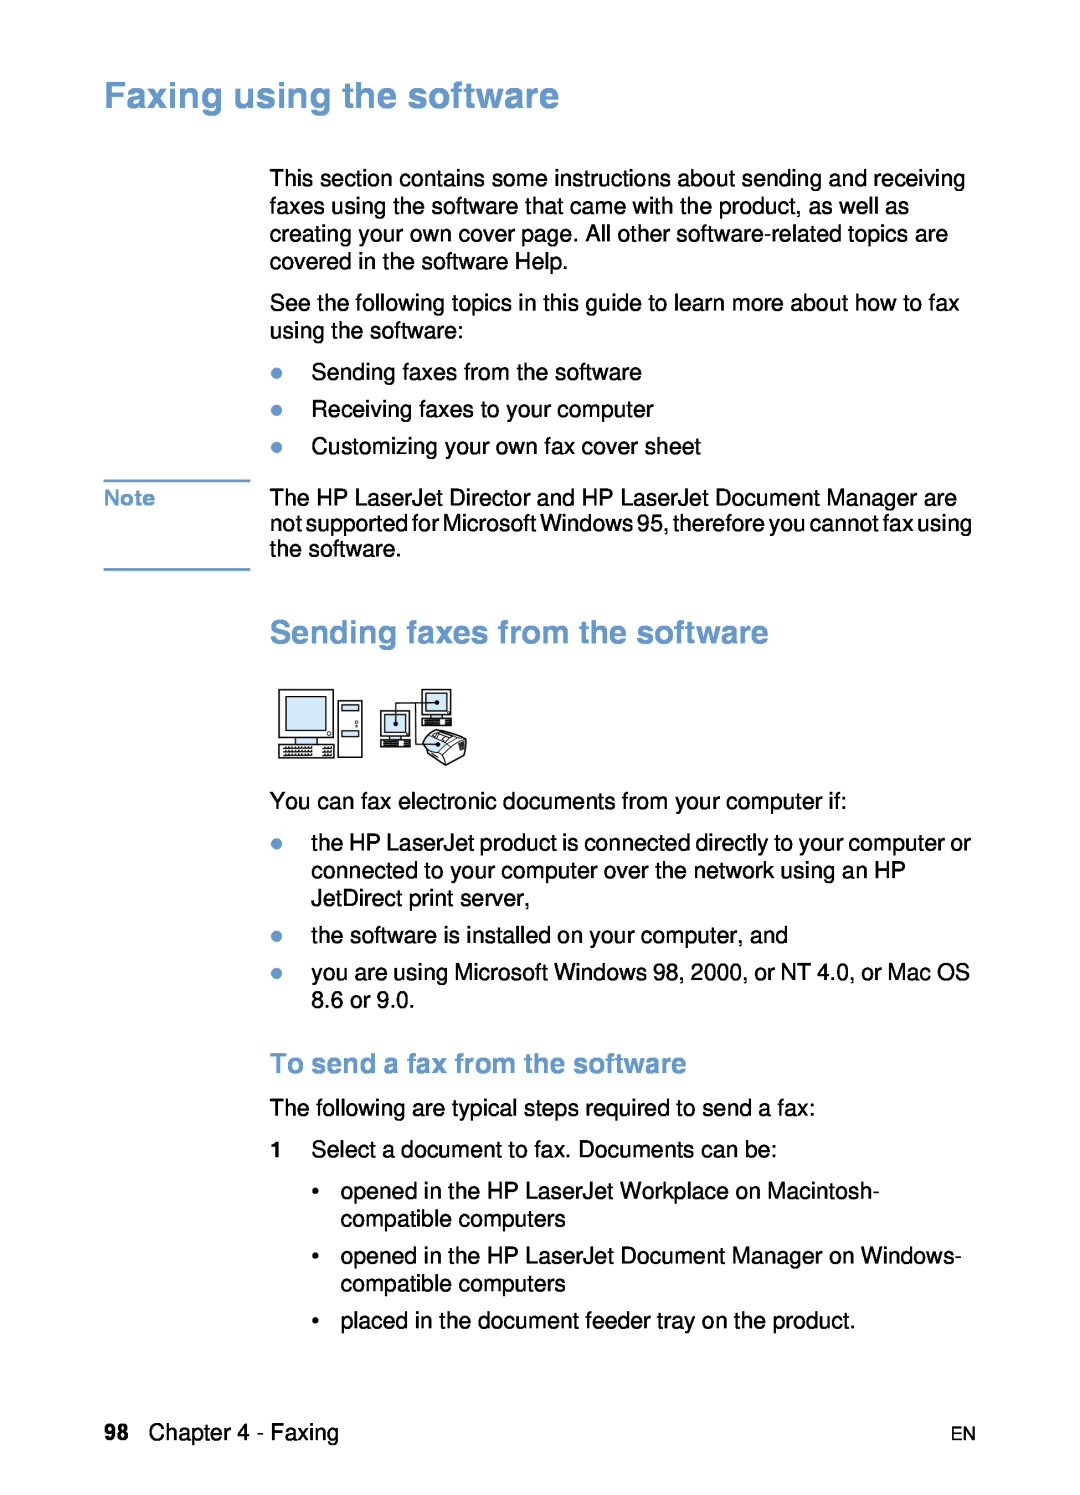 HP 3200 manual Faxing using the software, Sending faxes from the software, To send a fax from the software 